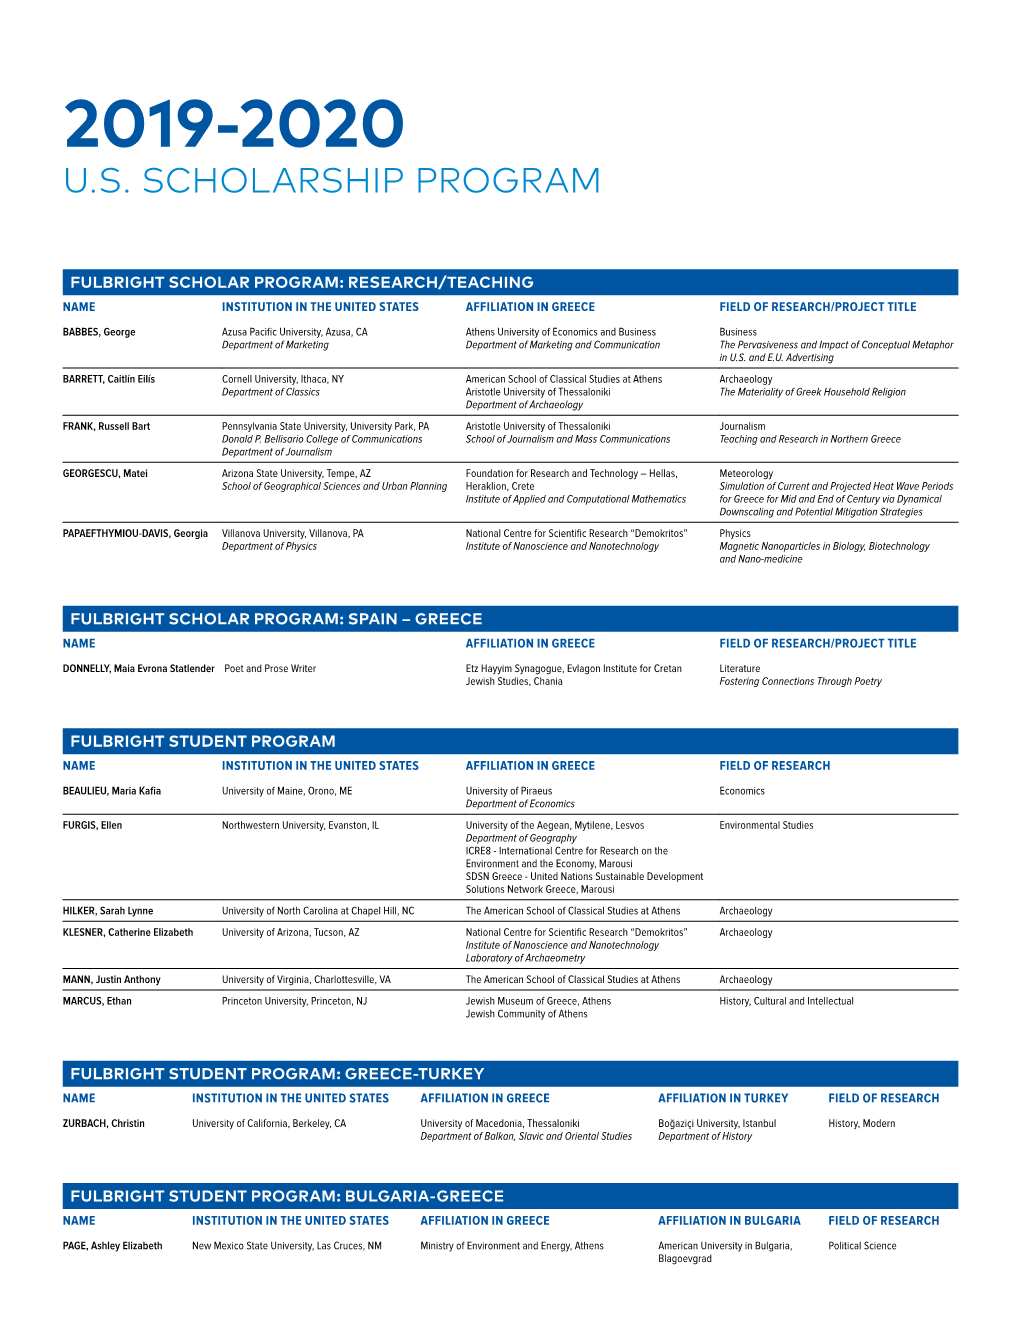 U.S. Scholarship Program